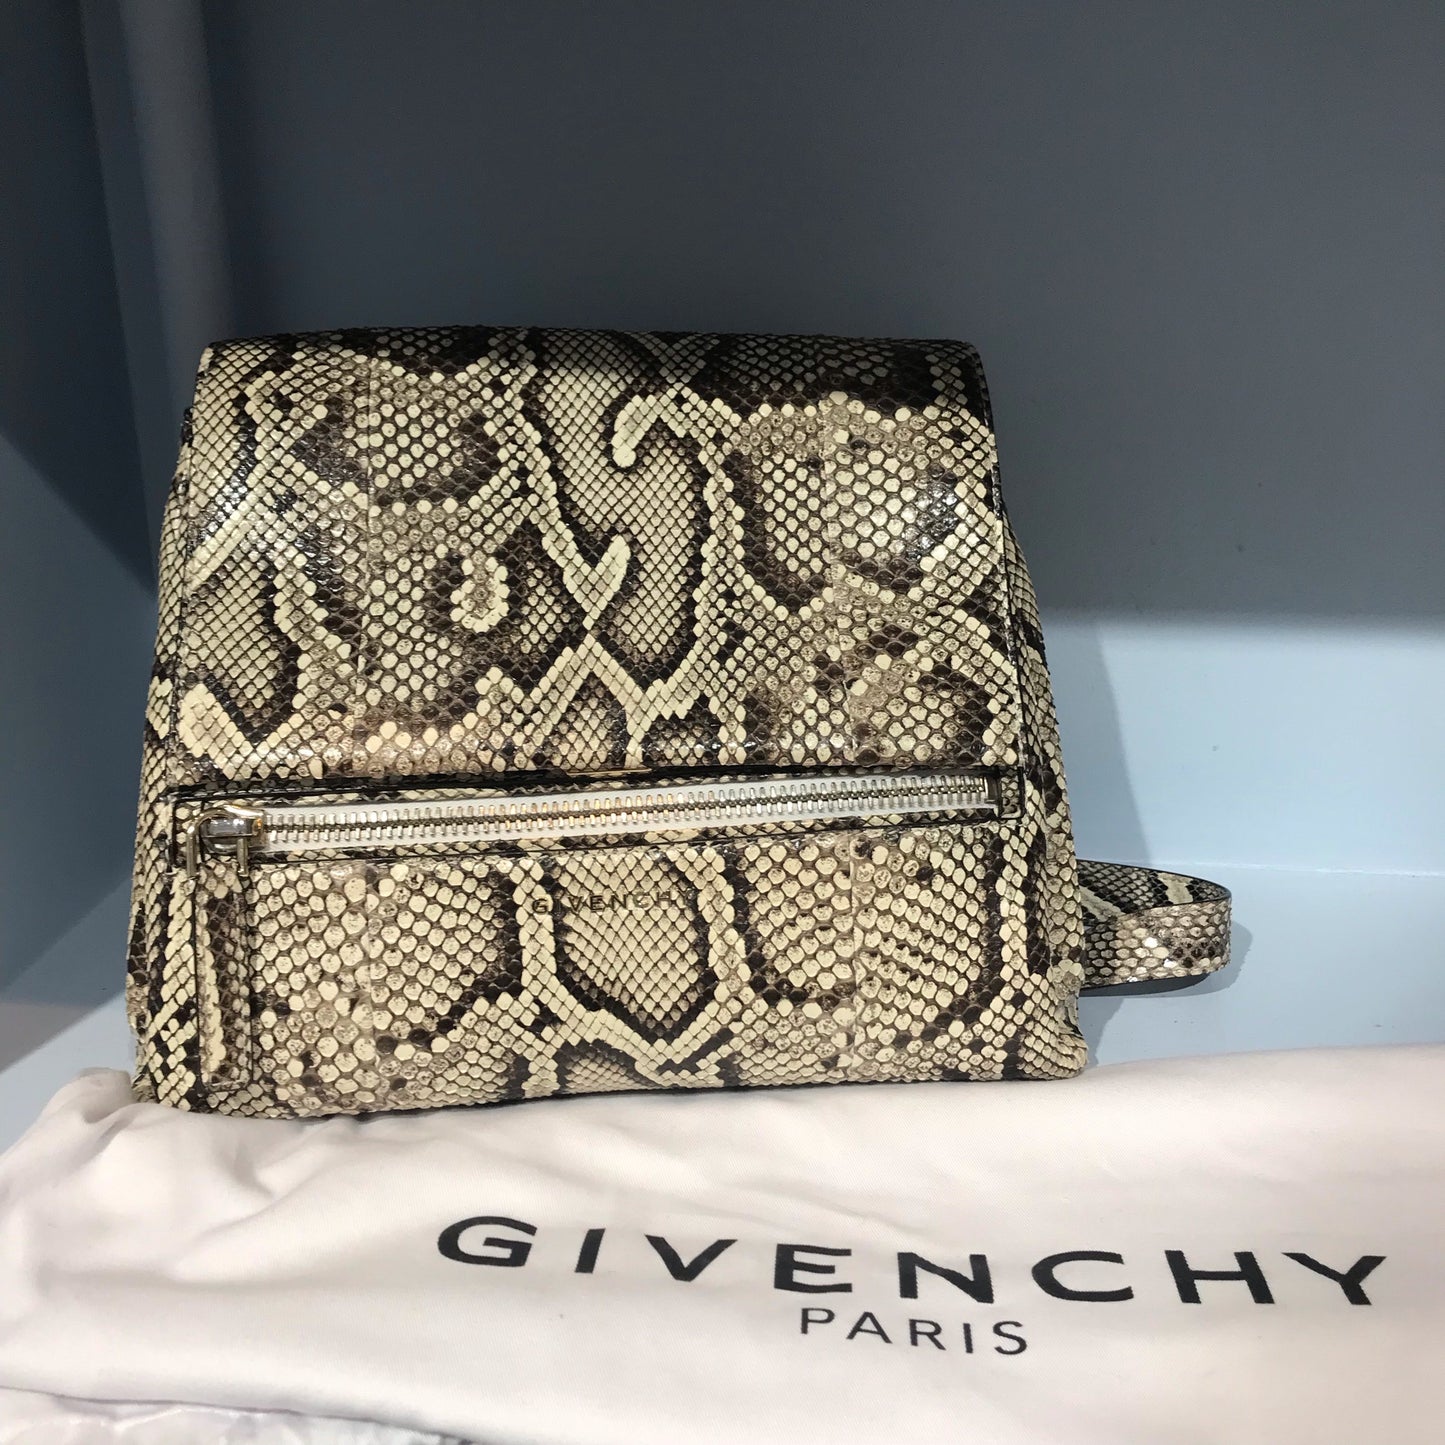 Sac Givenchy en pyhton beige